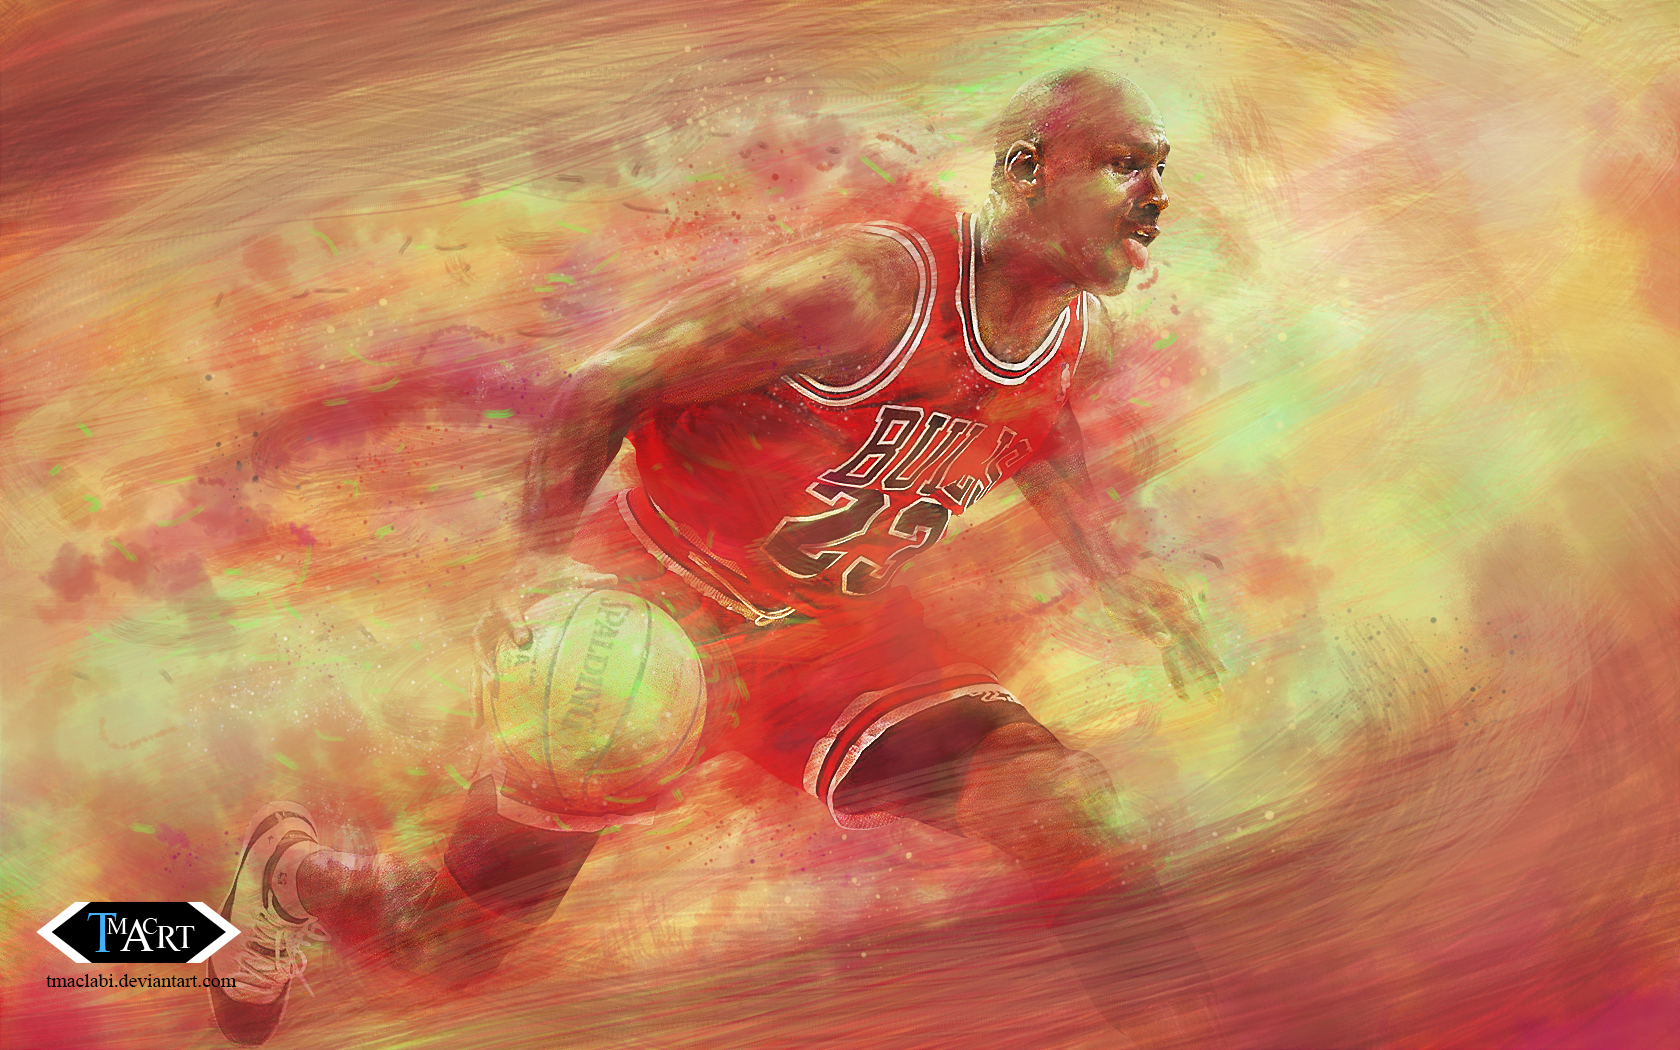 Michael Jordan Laser Red 23 Wallpaper by tmaclabi on DeviantArt